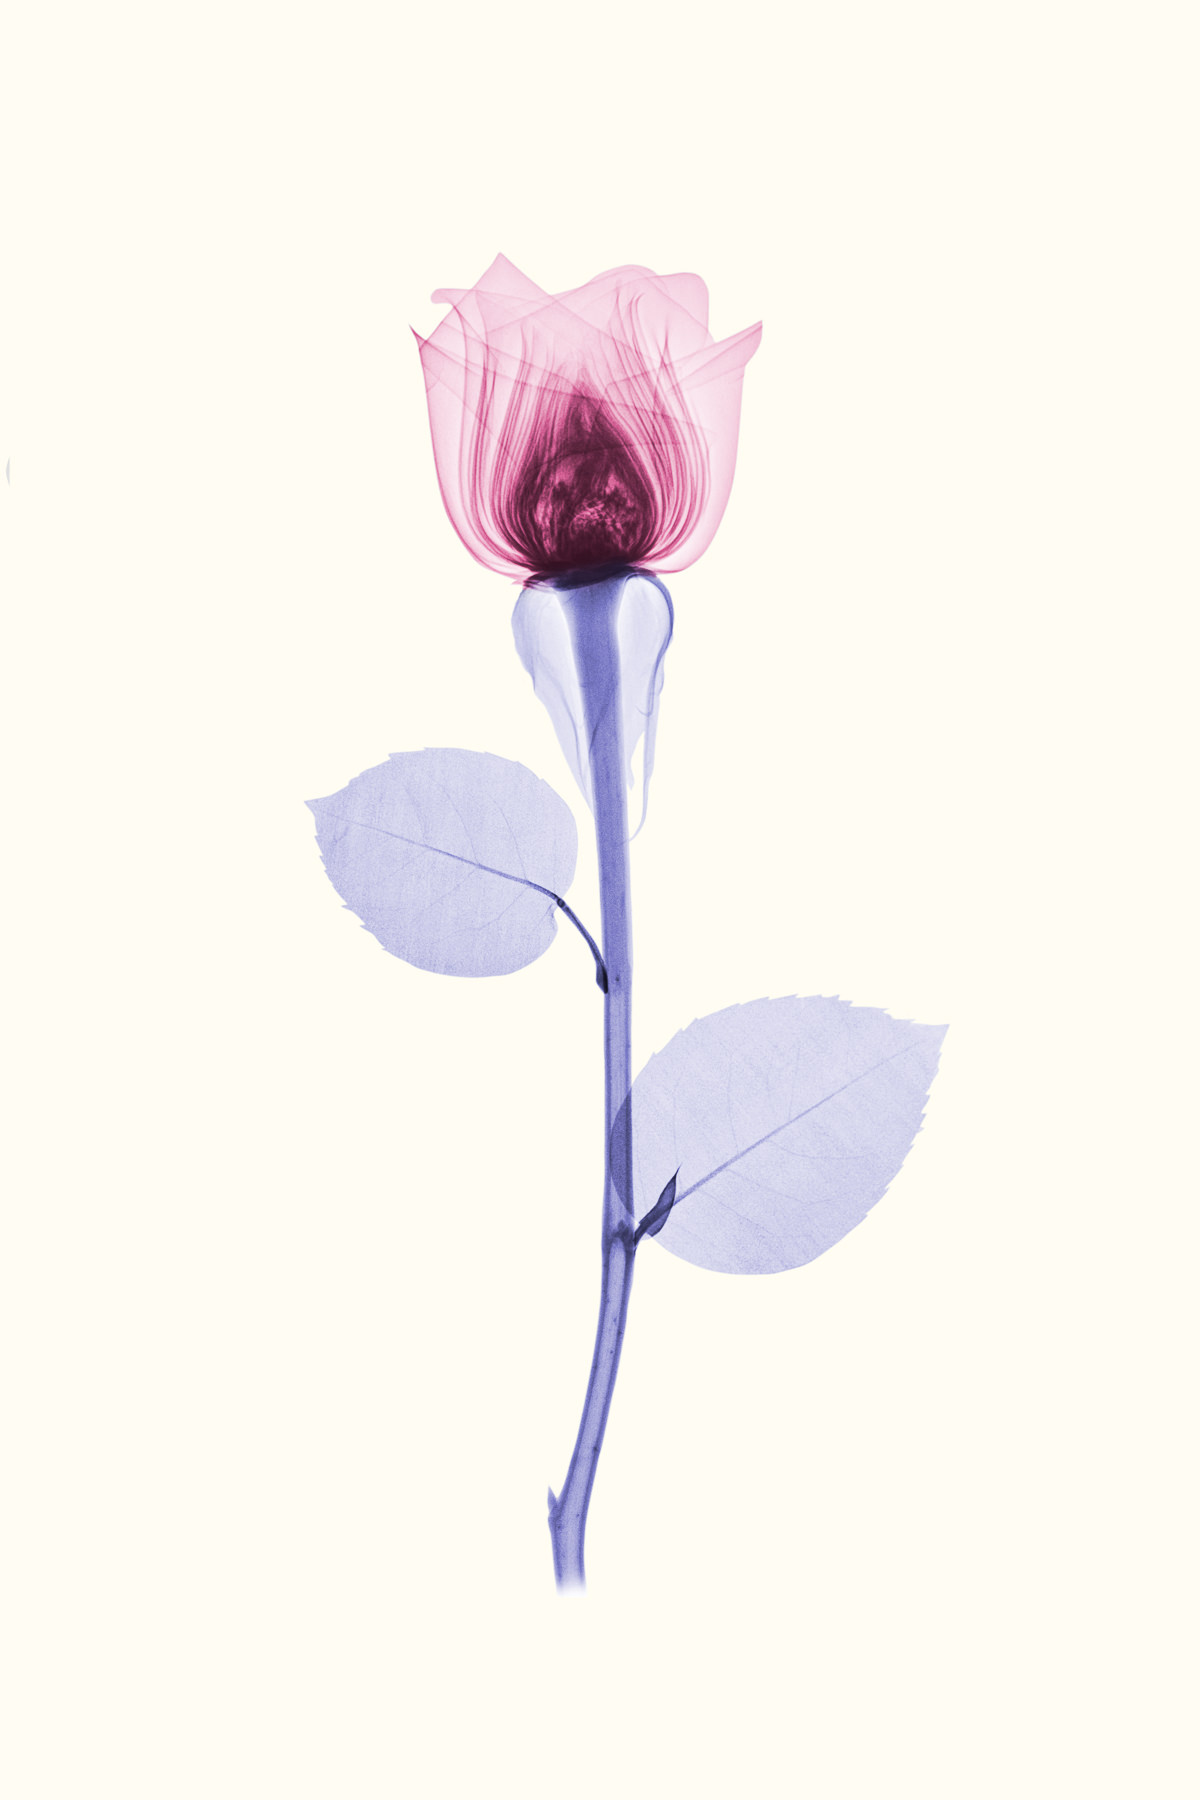 X-ray of a Rose, digital print by Brendan Fitzpatrick